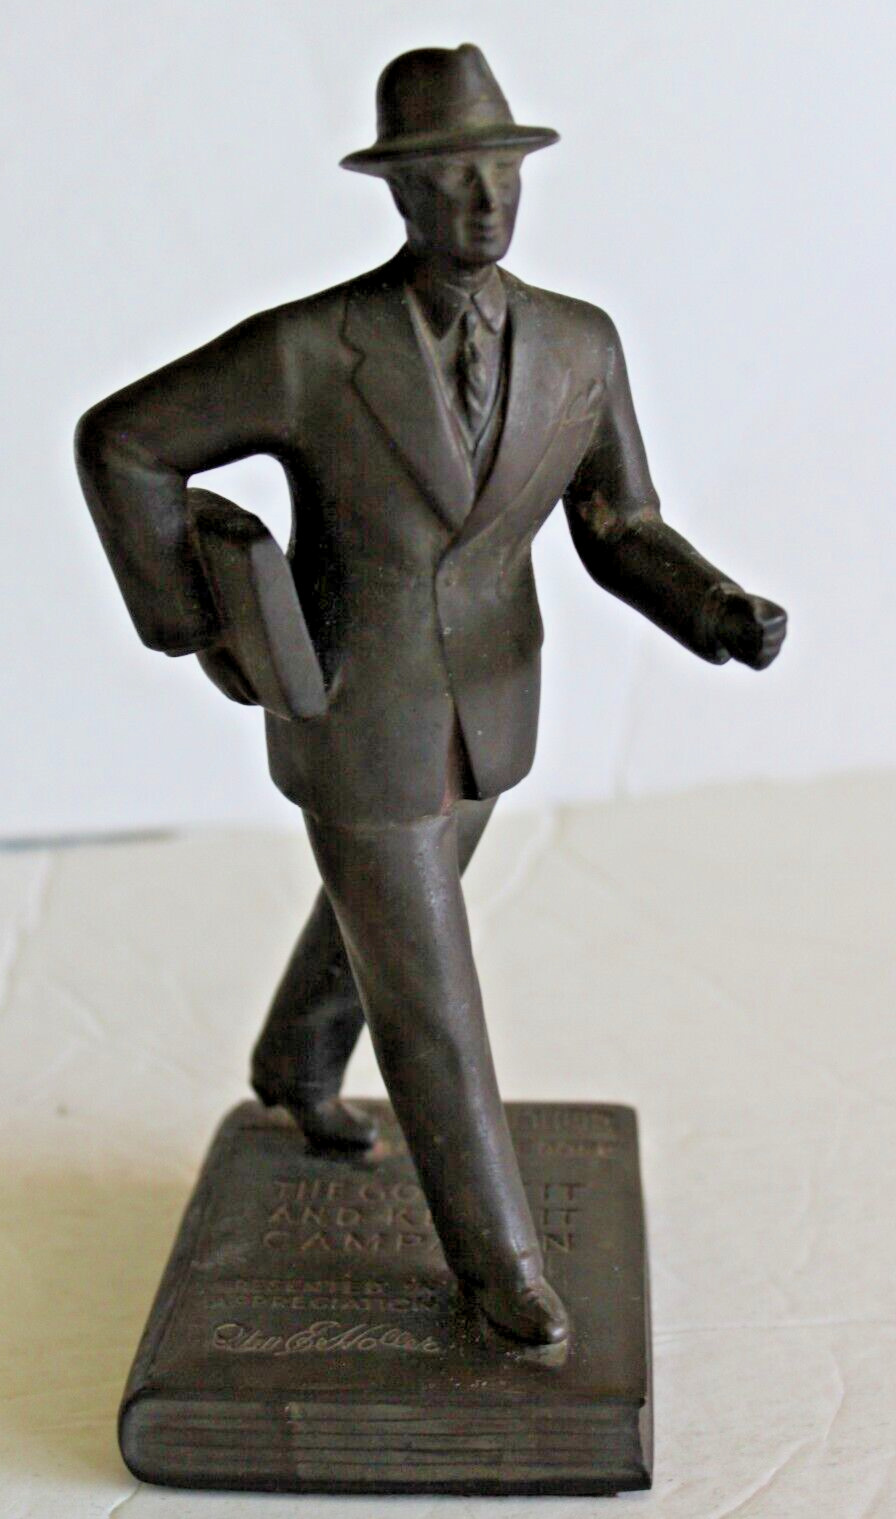 Vtg. Chevy GO GETTER Salesman Award Man Walking on Book Statue Trophy circa 1940